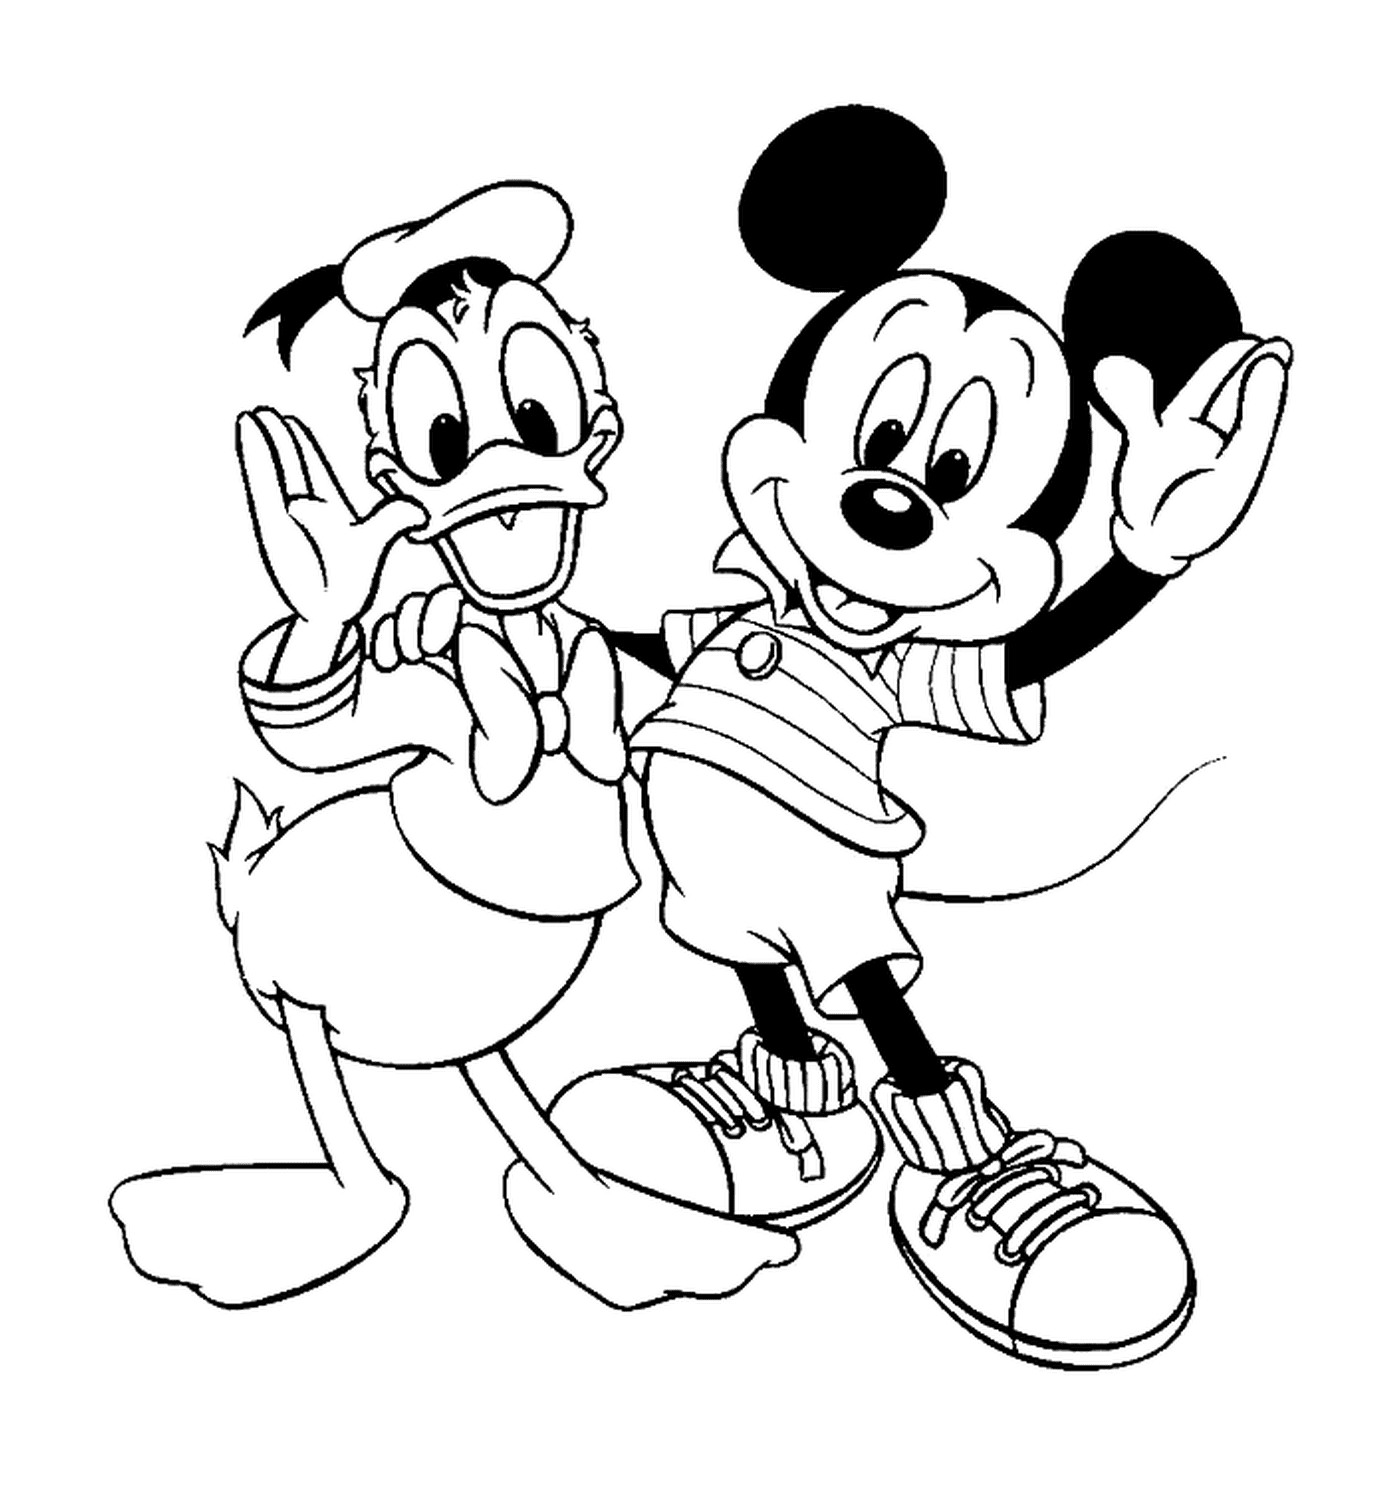 dessin de Mickey et son ami Donald